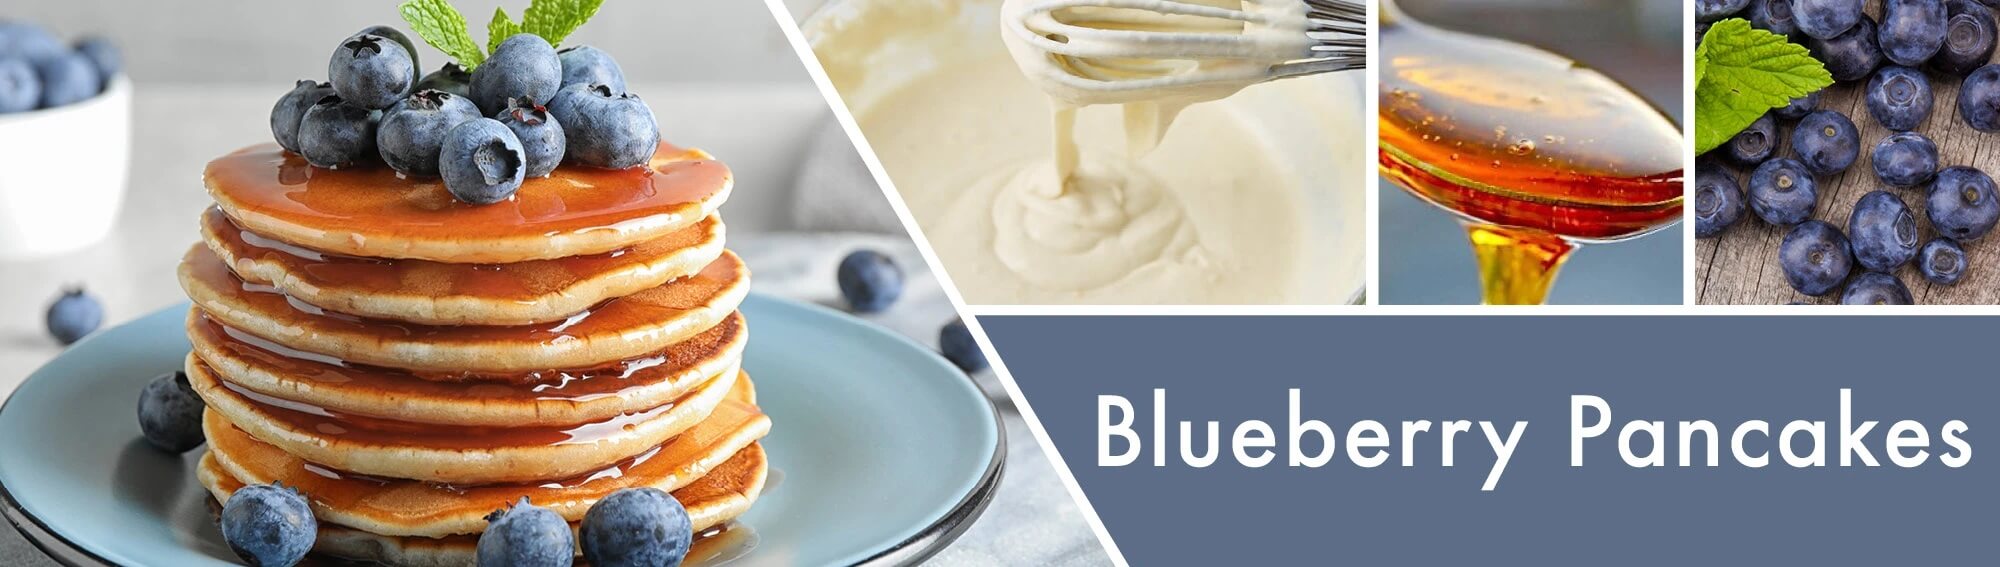 Blueberry-Pancakes-Banner